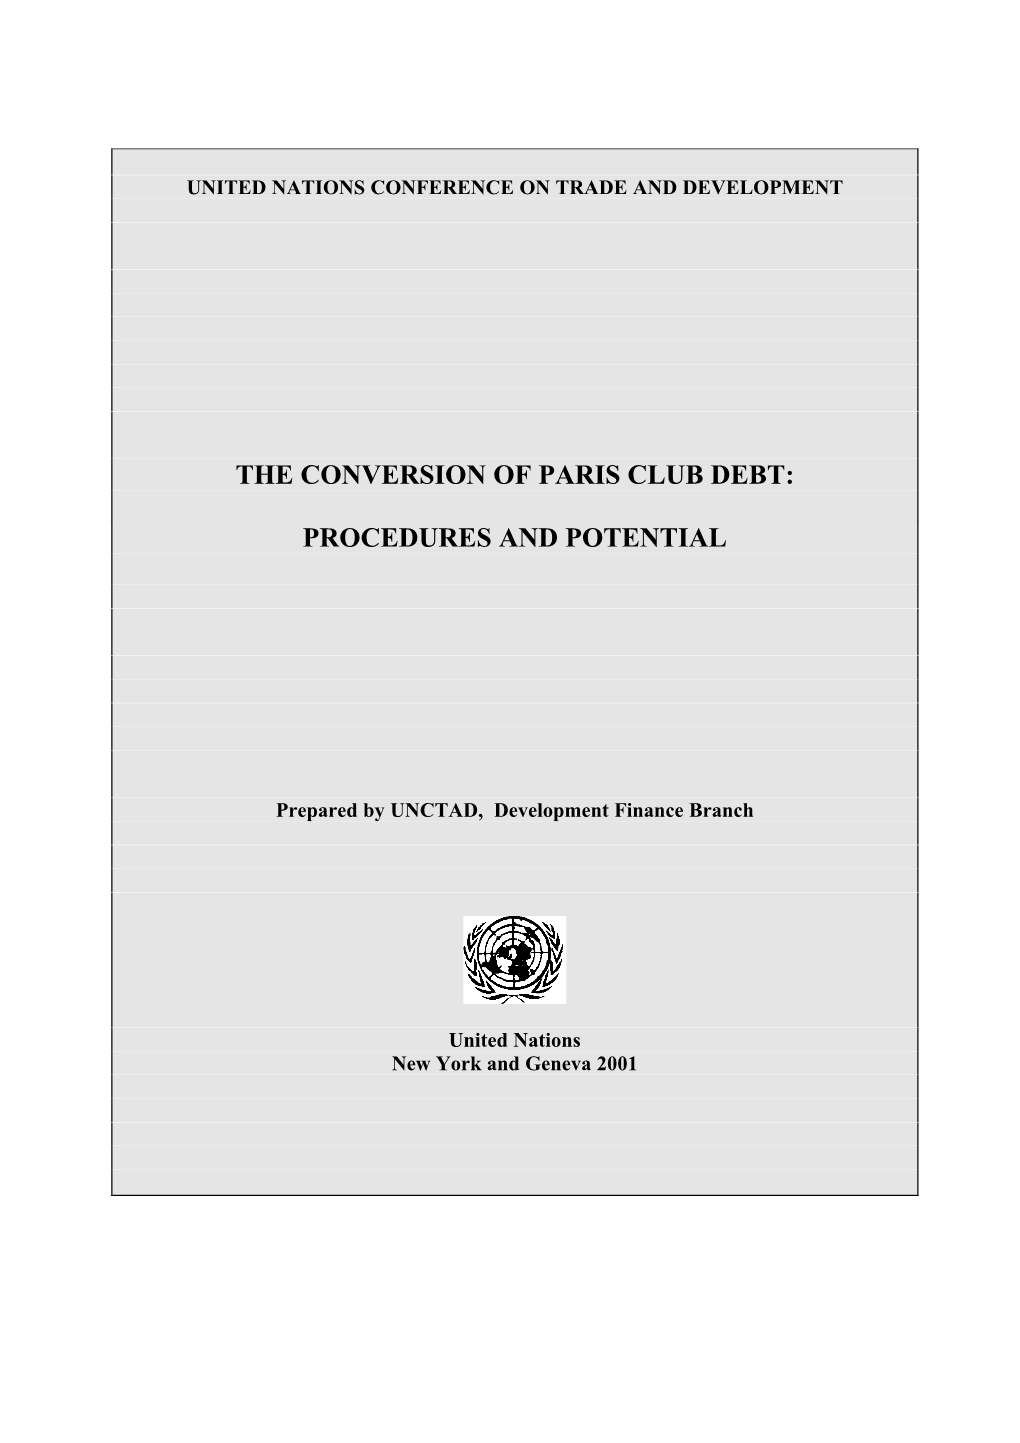 The Conversion of Paris Club Debt